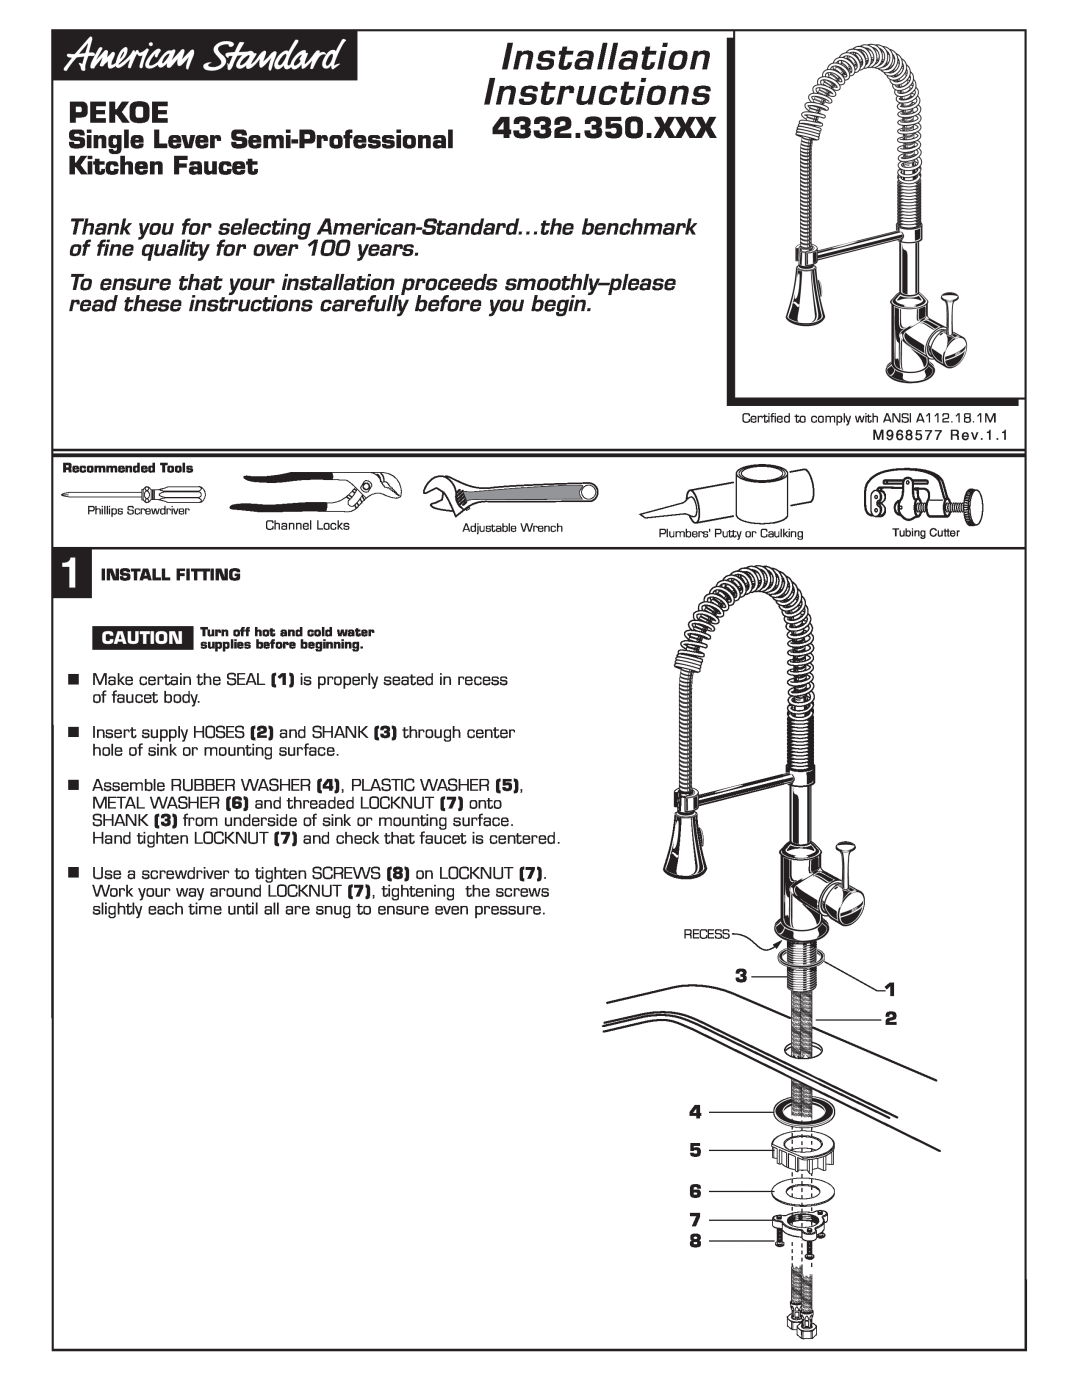 American Standard 4332.350.XXX installation instructions Pekoe, Single Lever Semi-Professional, Kitchen Faucet 